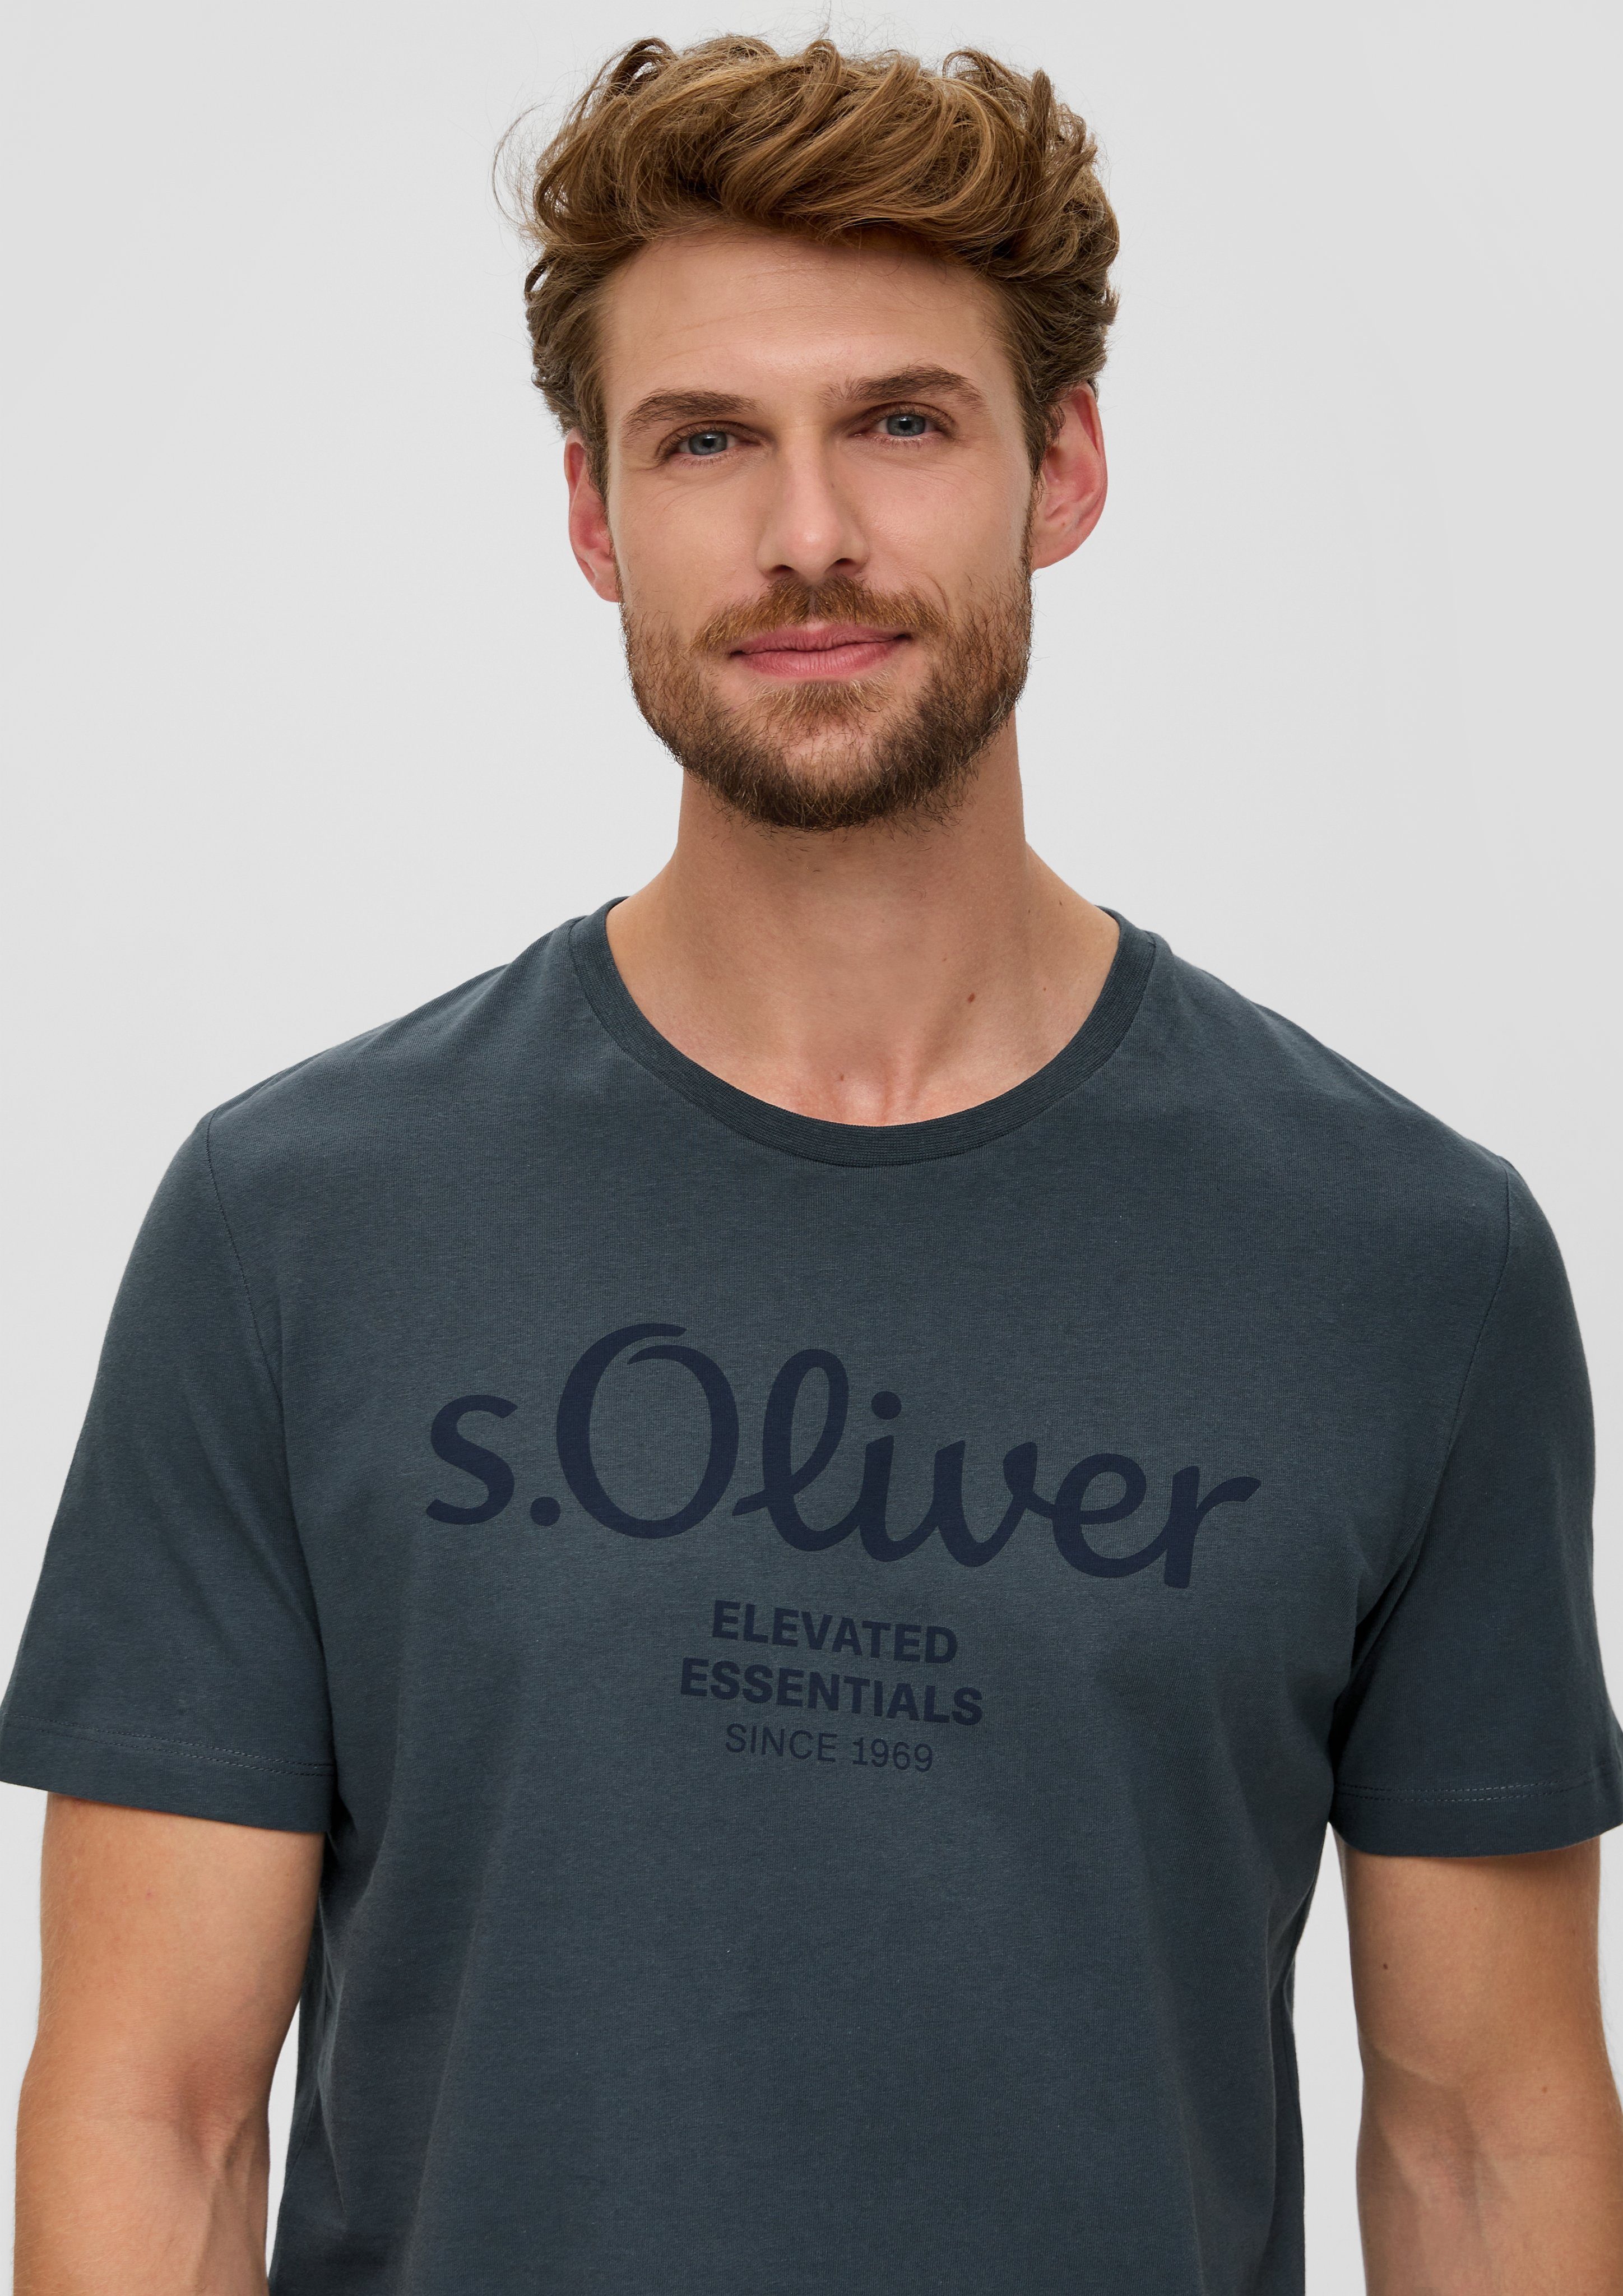 im dark Look grey T-Shirt s.Oliver sportiven